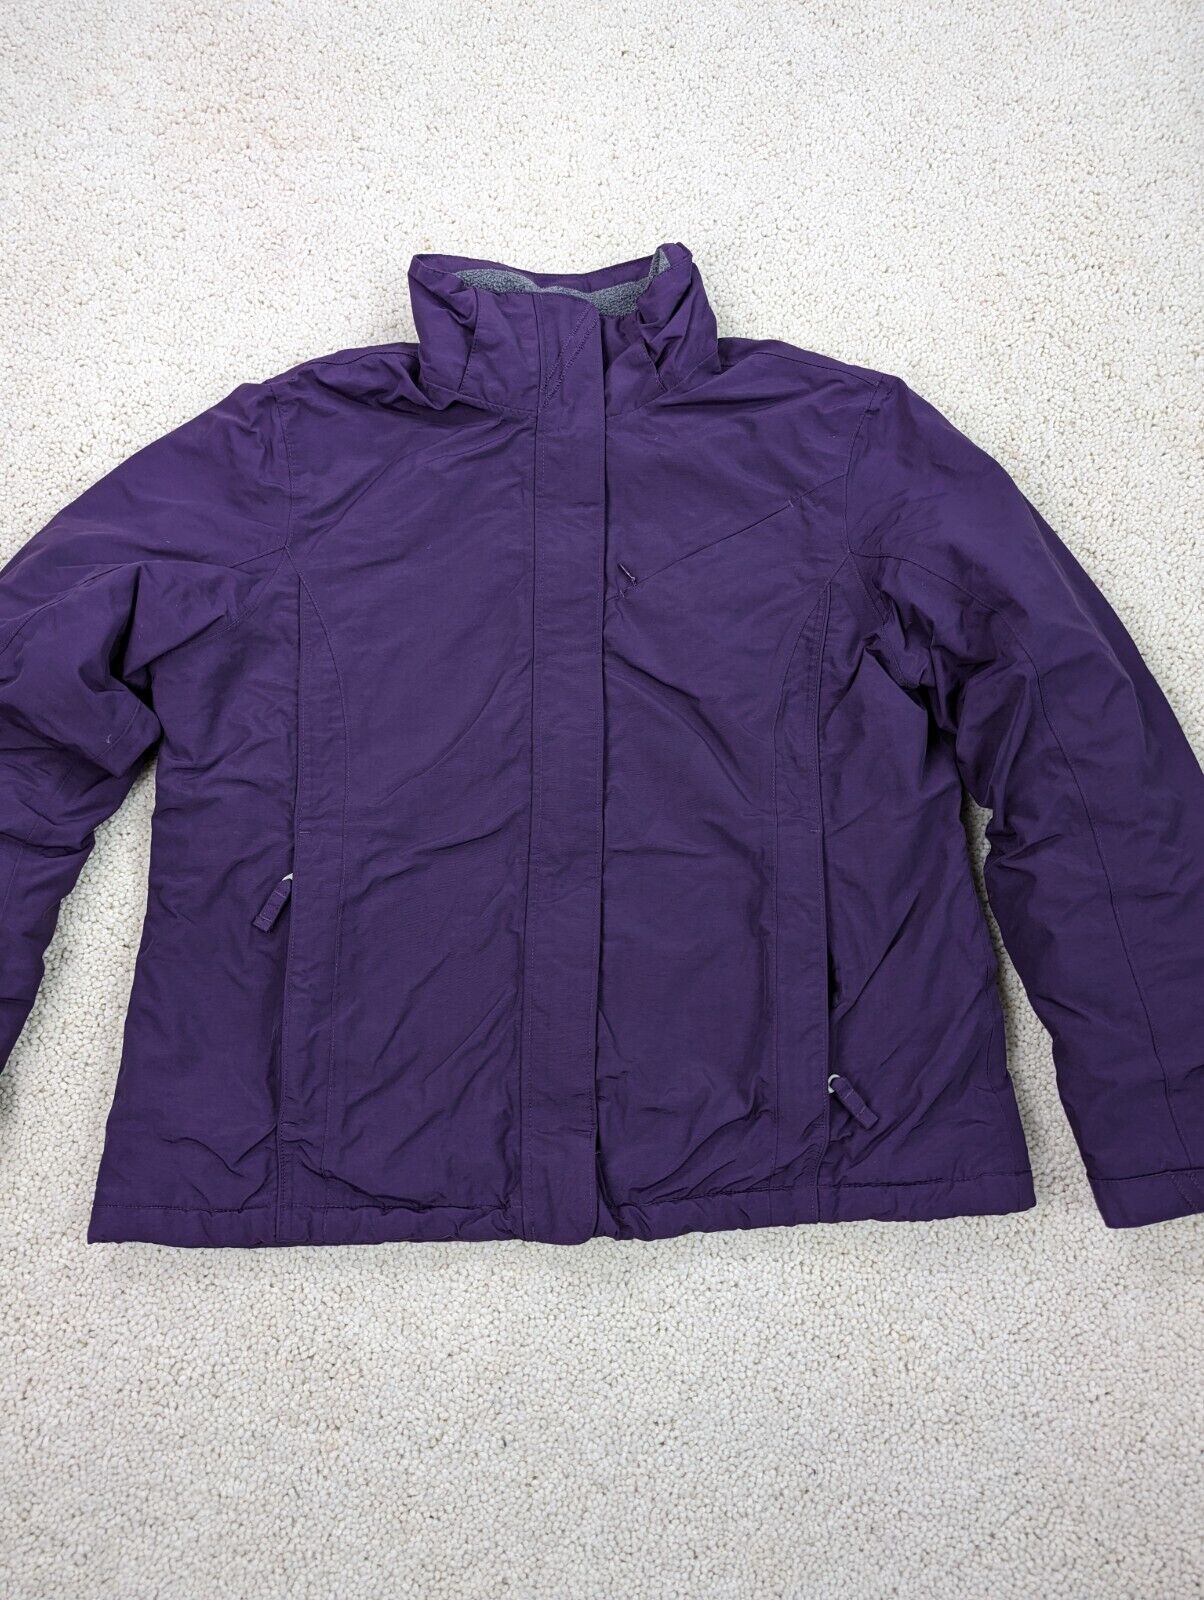 Lands End Jacket Womens Medium Petite Purple The … - image 1